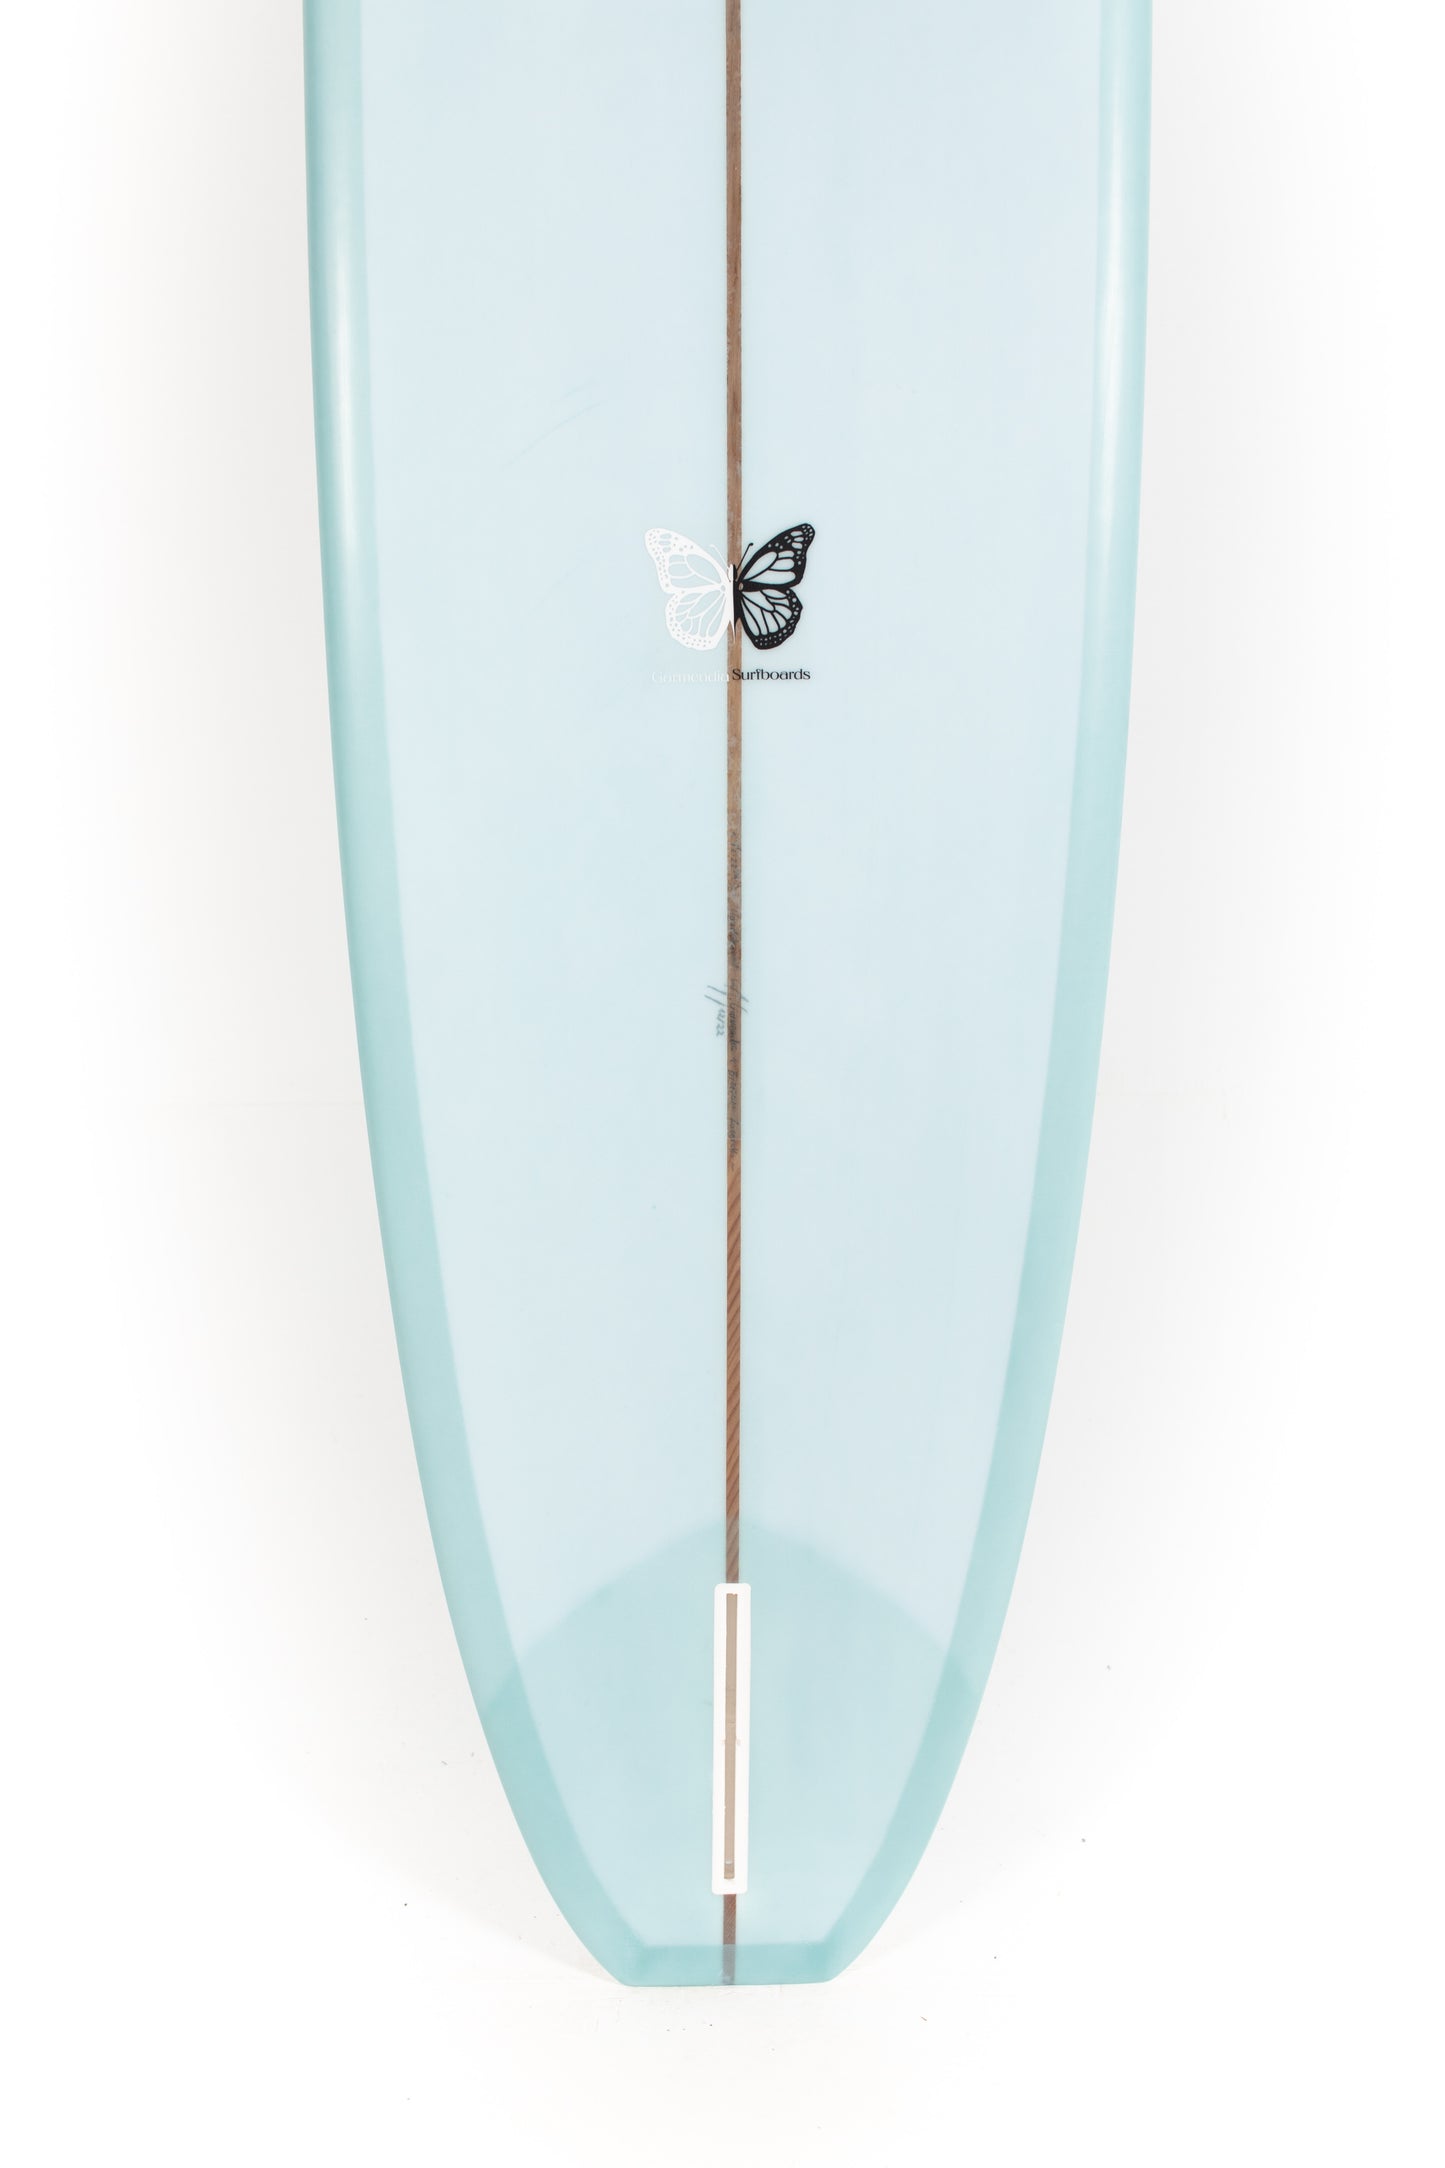 
                  
                    Pukas Surf Shop - Garmendia Surfboards - NOSERIDER - 9'2" x 22 7/8 x 3- Ref:NOSERIDER92
                  
                